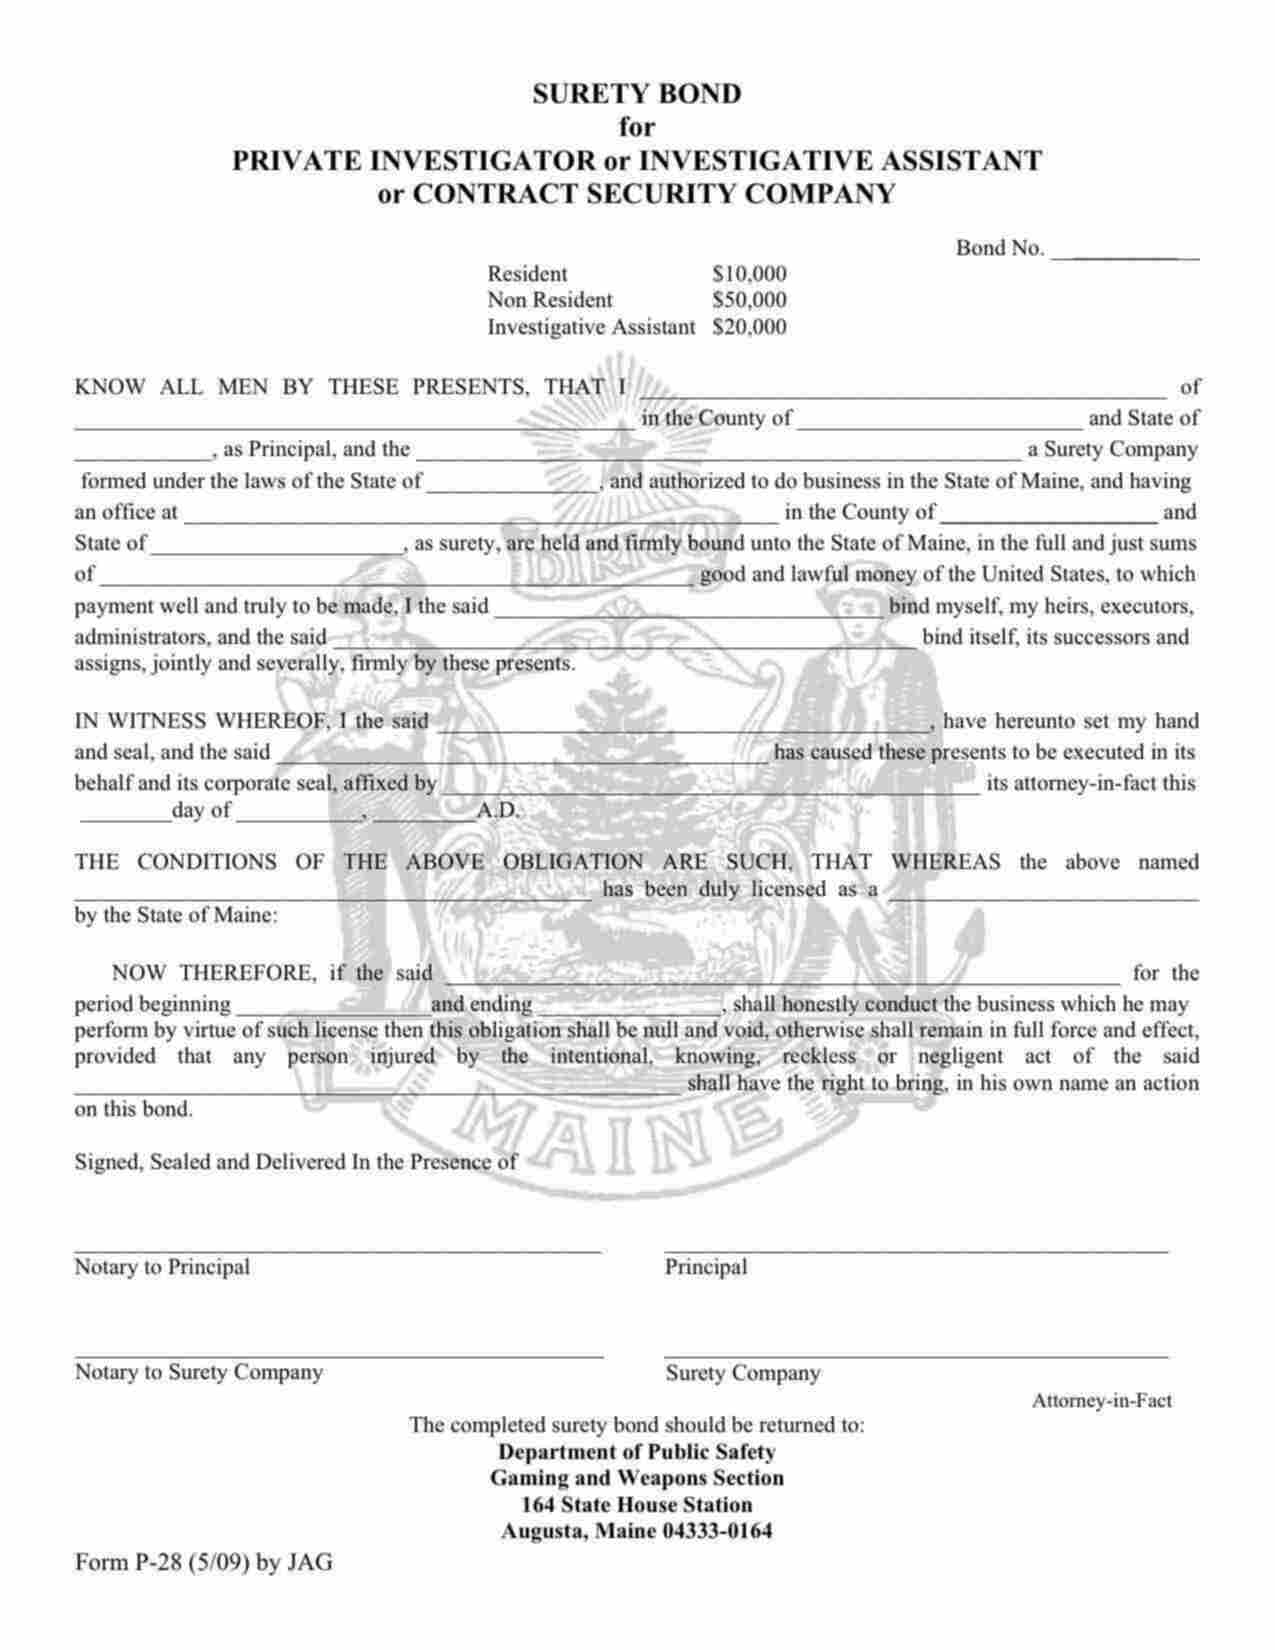 Maine Private Investigator: Resident Bond Form